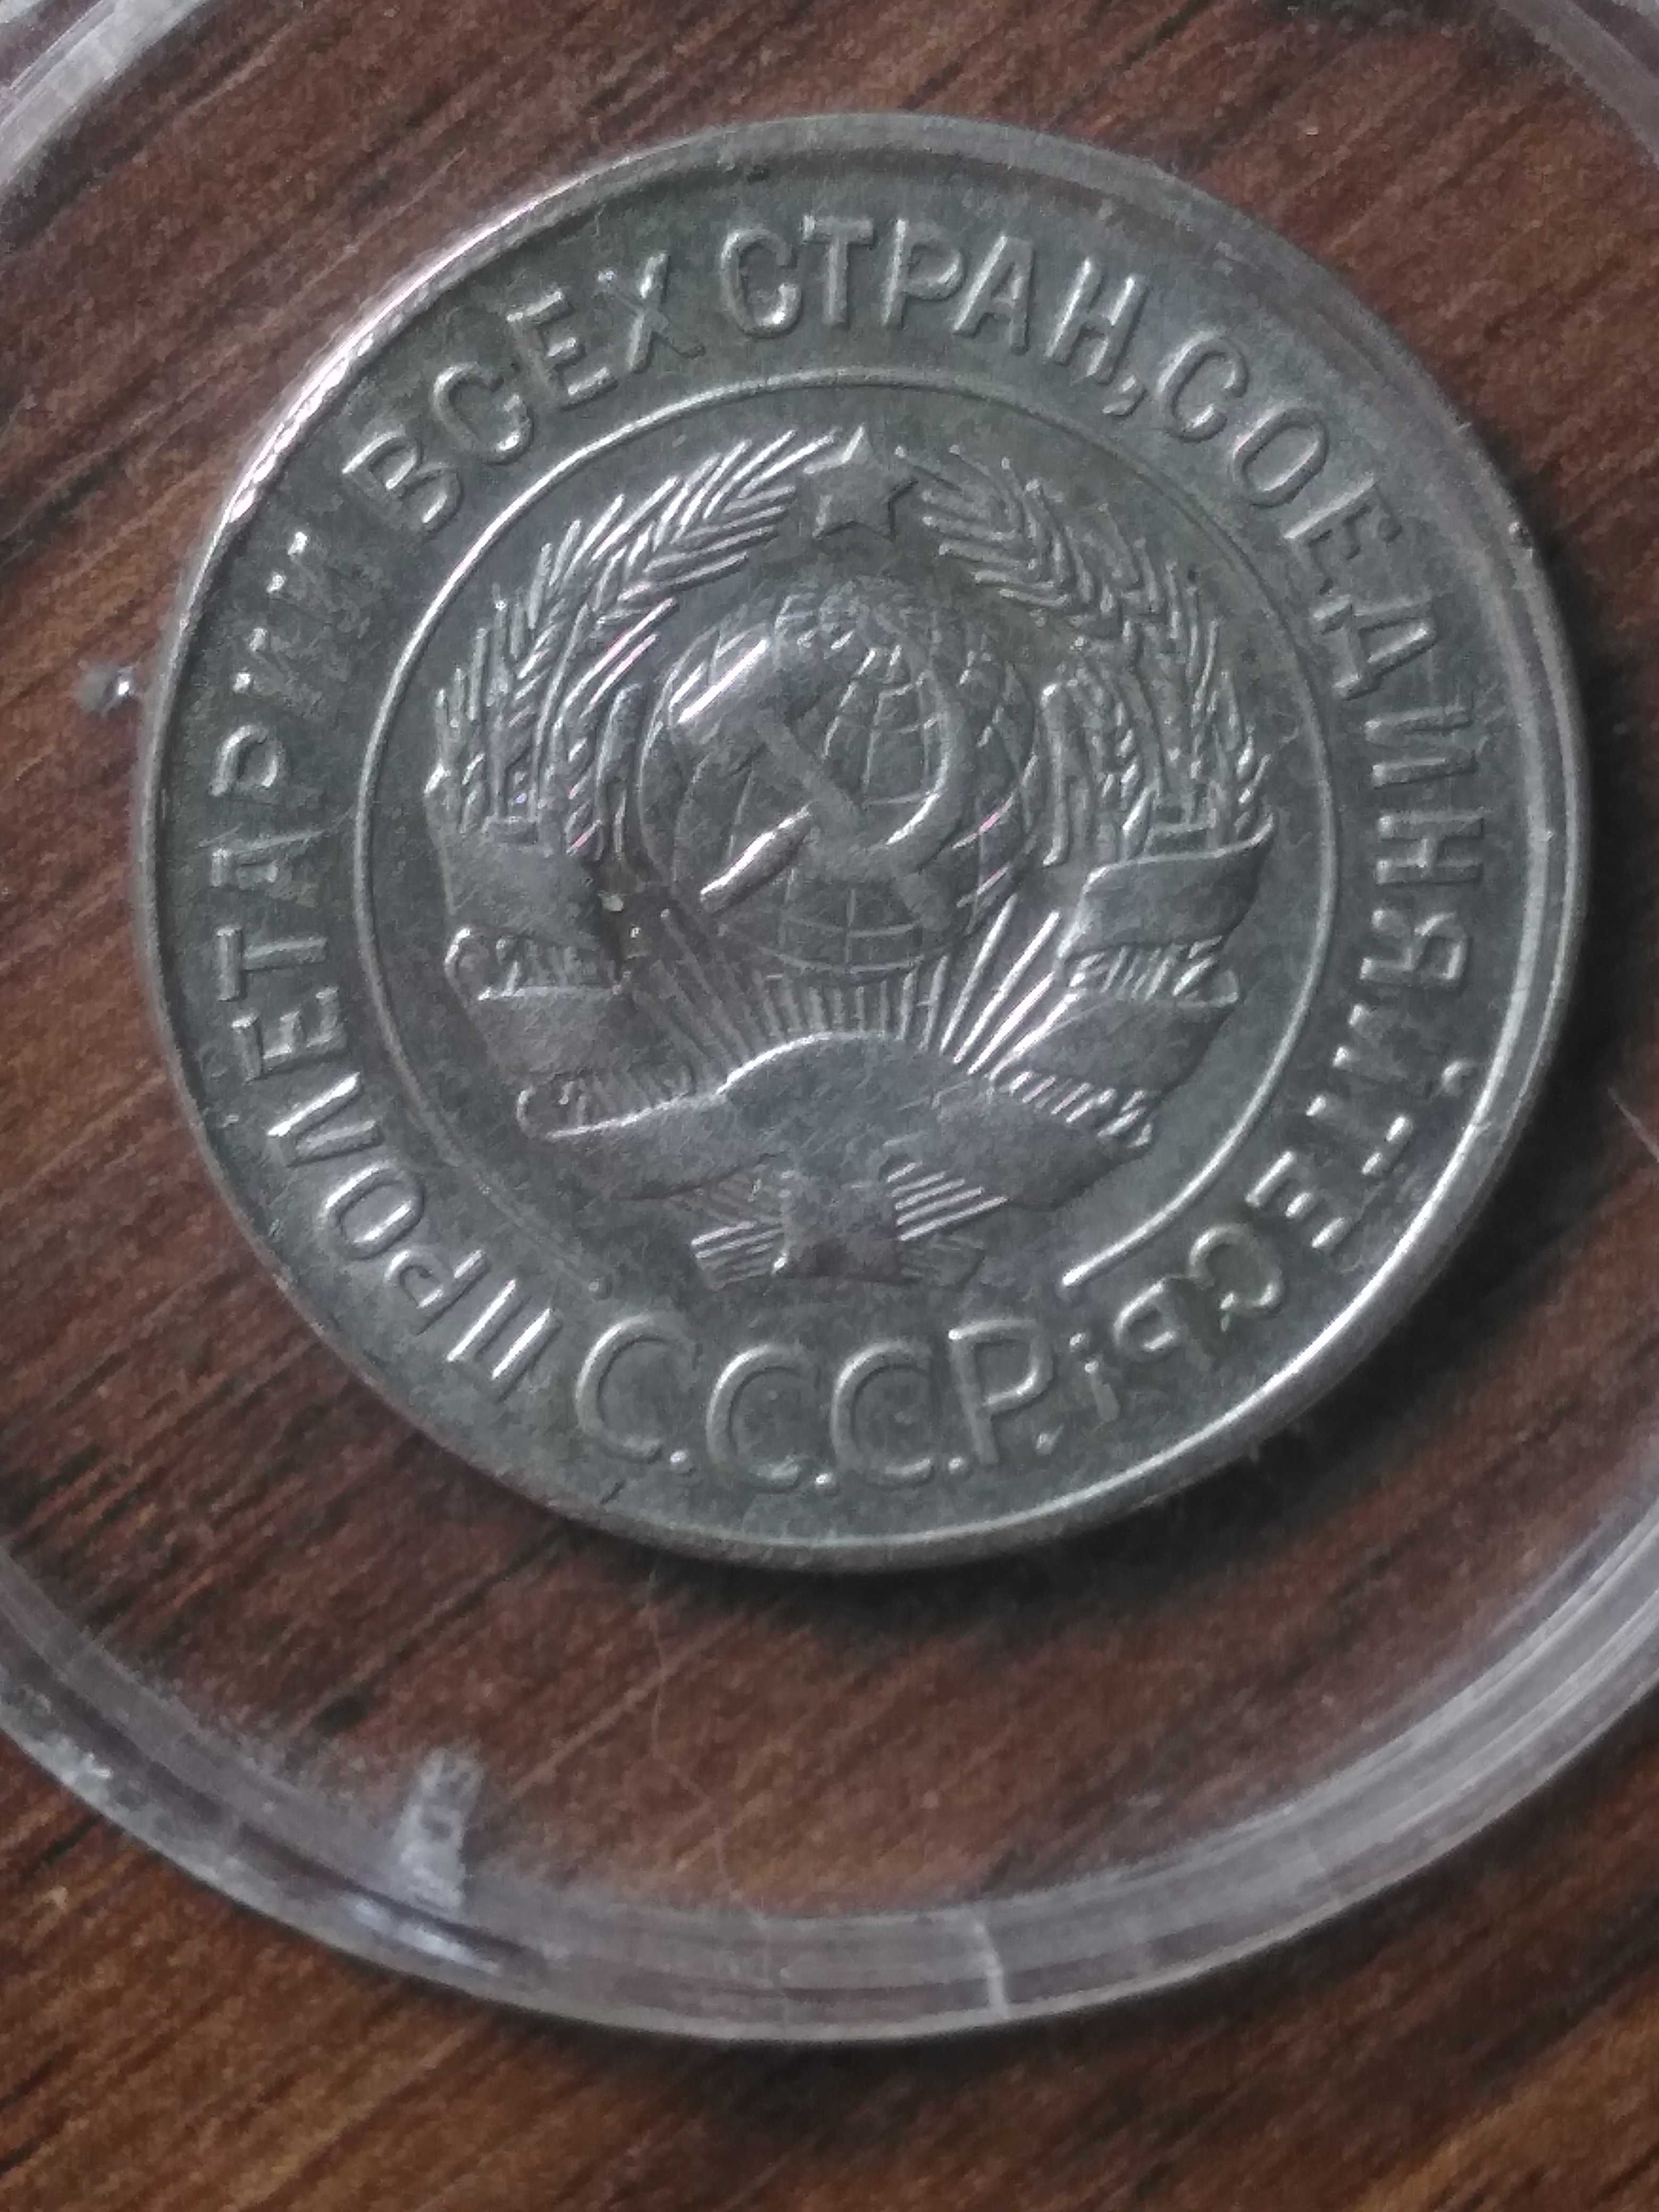 Серебряная монета СССР, перепутка, штамп 3 копеек